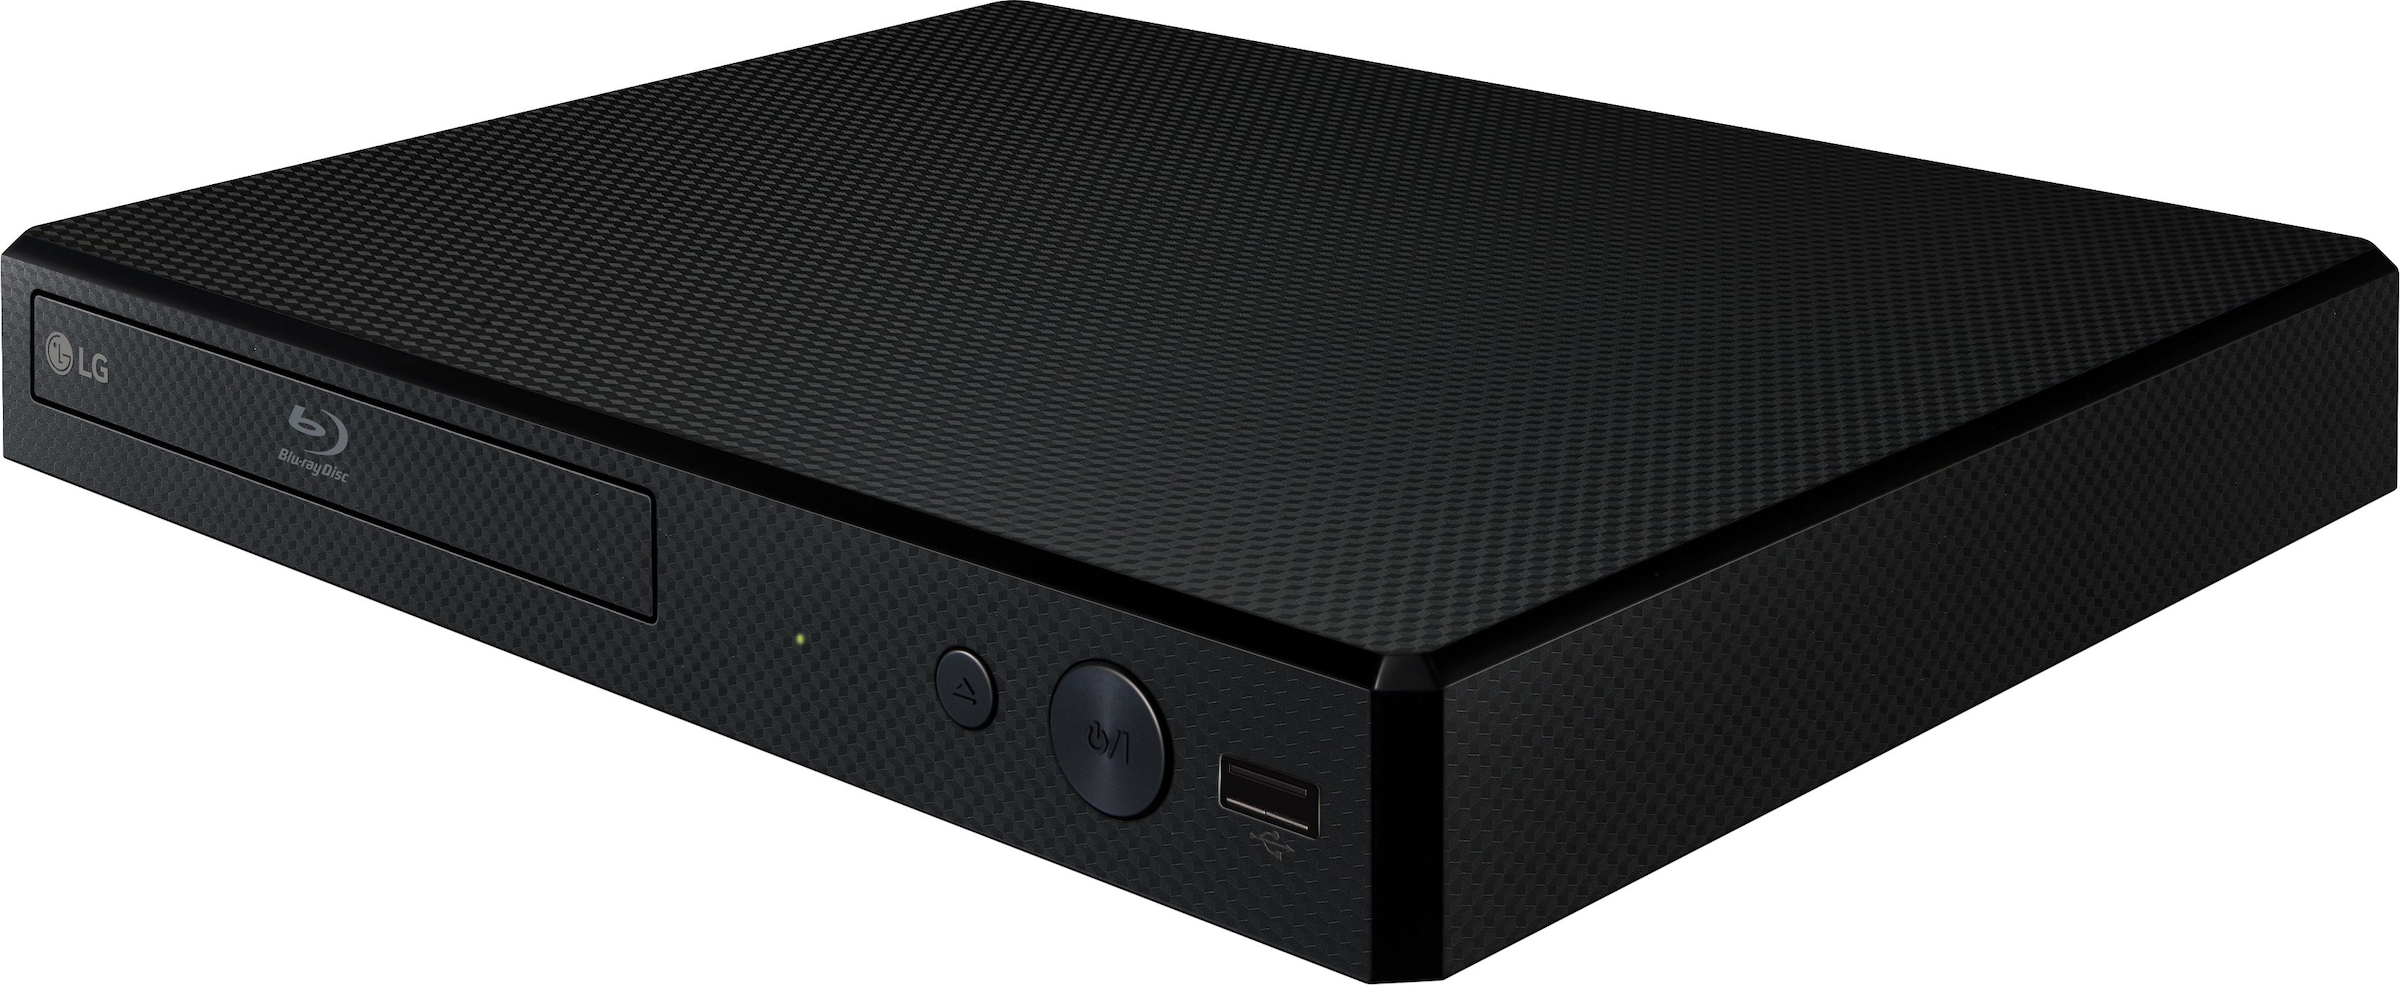 Blu-ray-Player »BP250«, Full HD Upscaling,HDMI und USB,kompatibel zu externer Festplatte